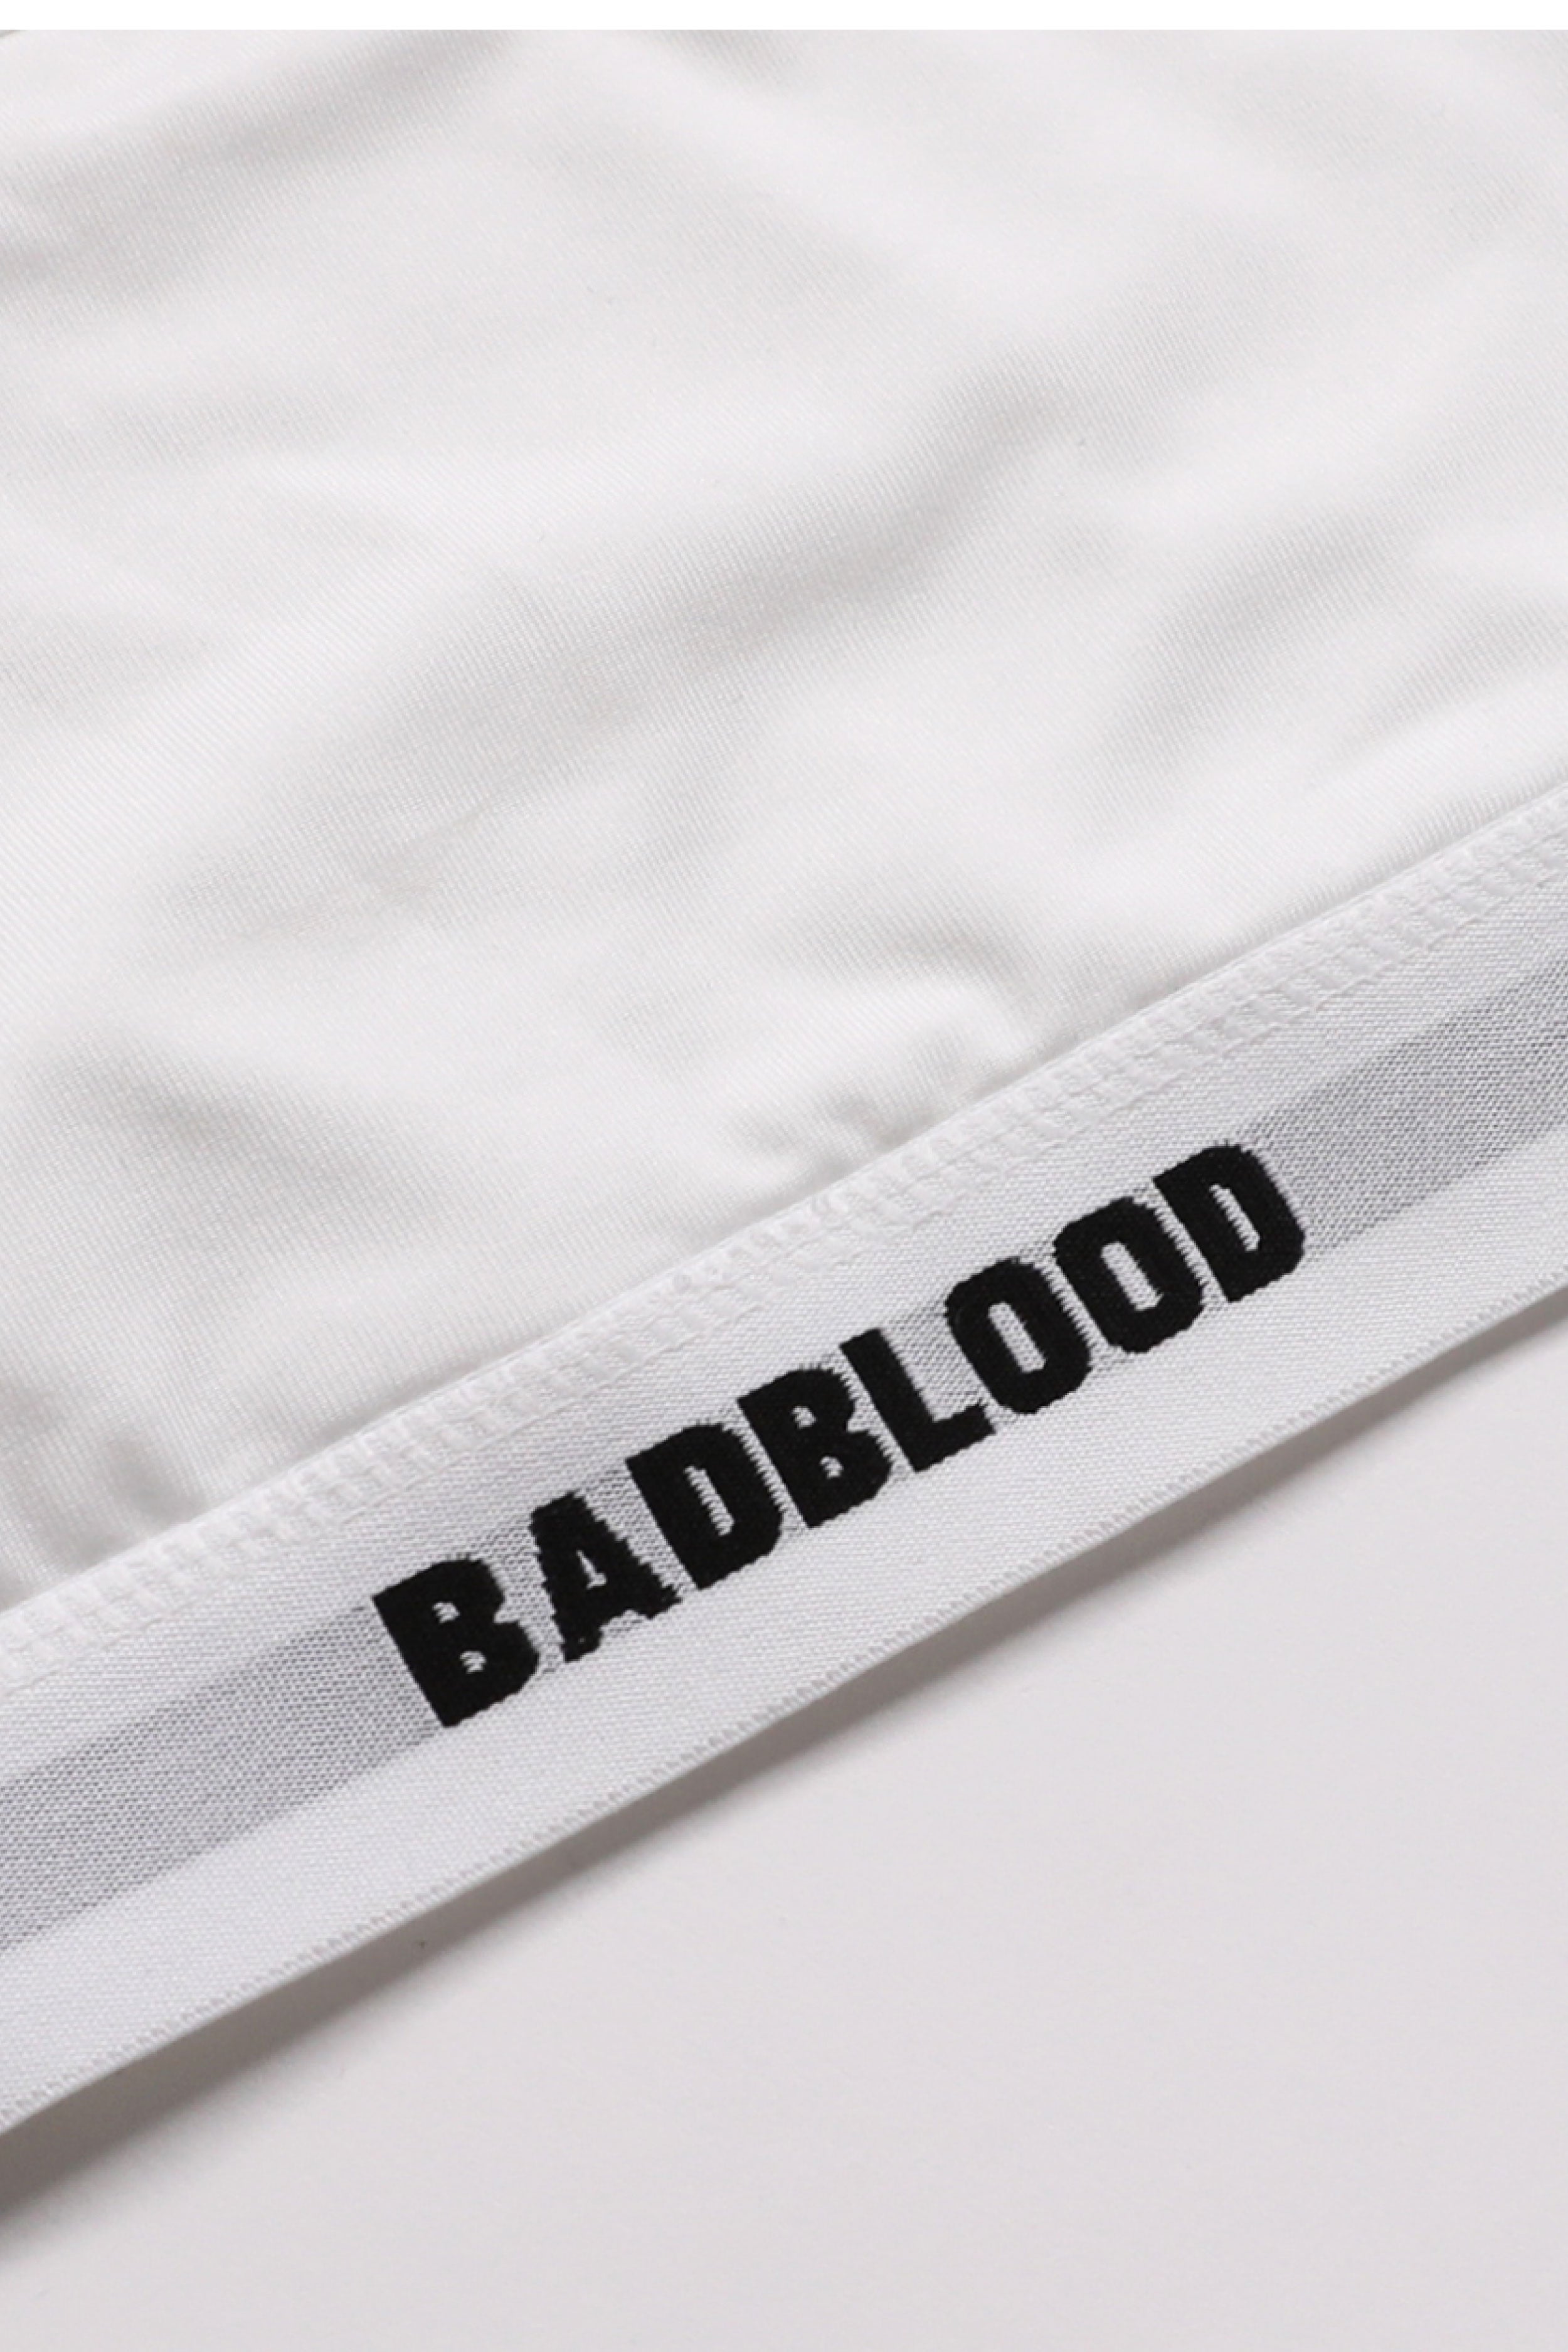 Badblood 小號標誌抹胸胸罩 白色